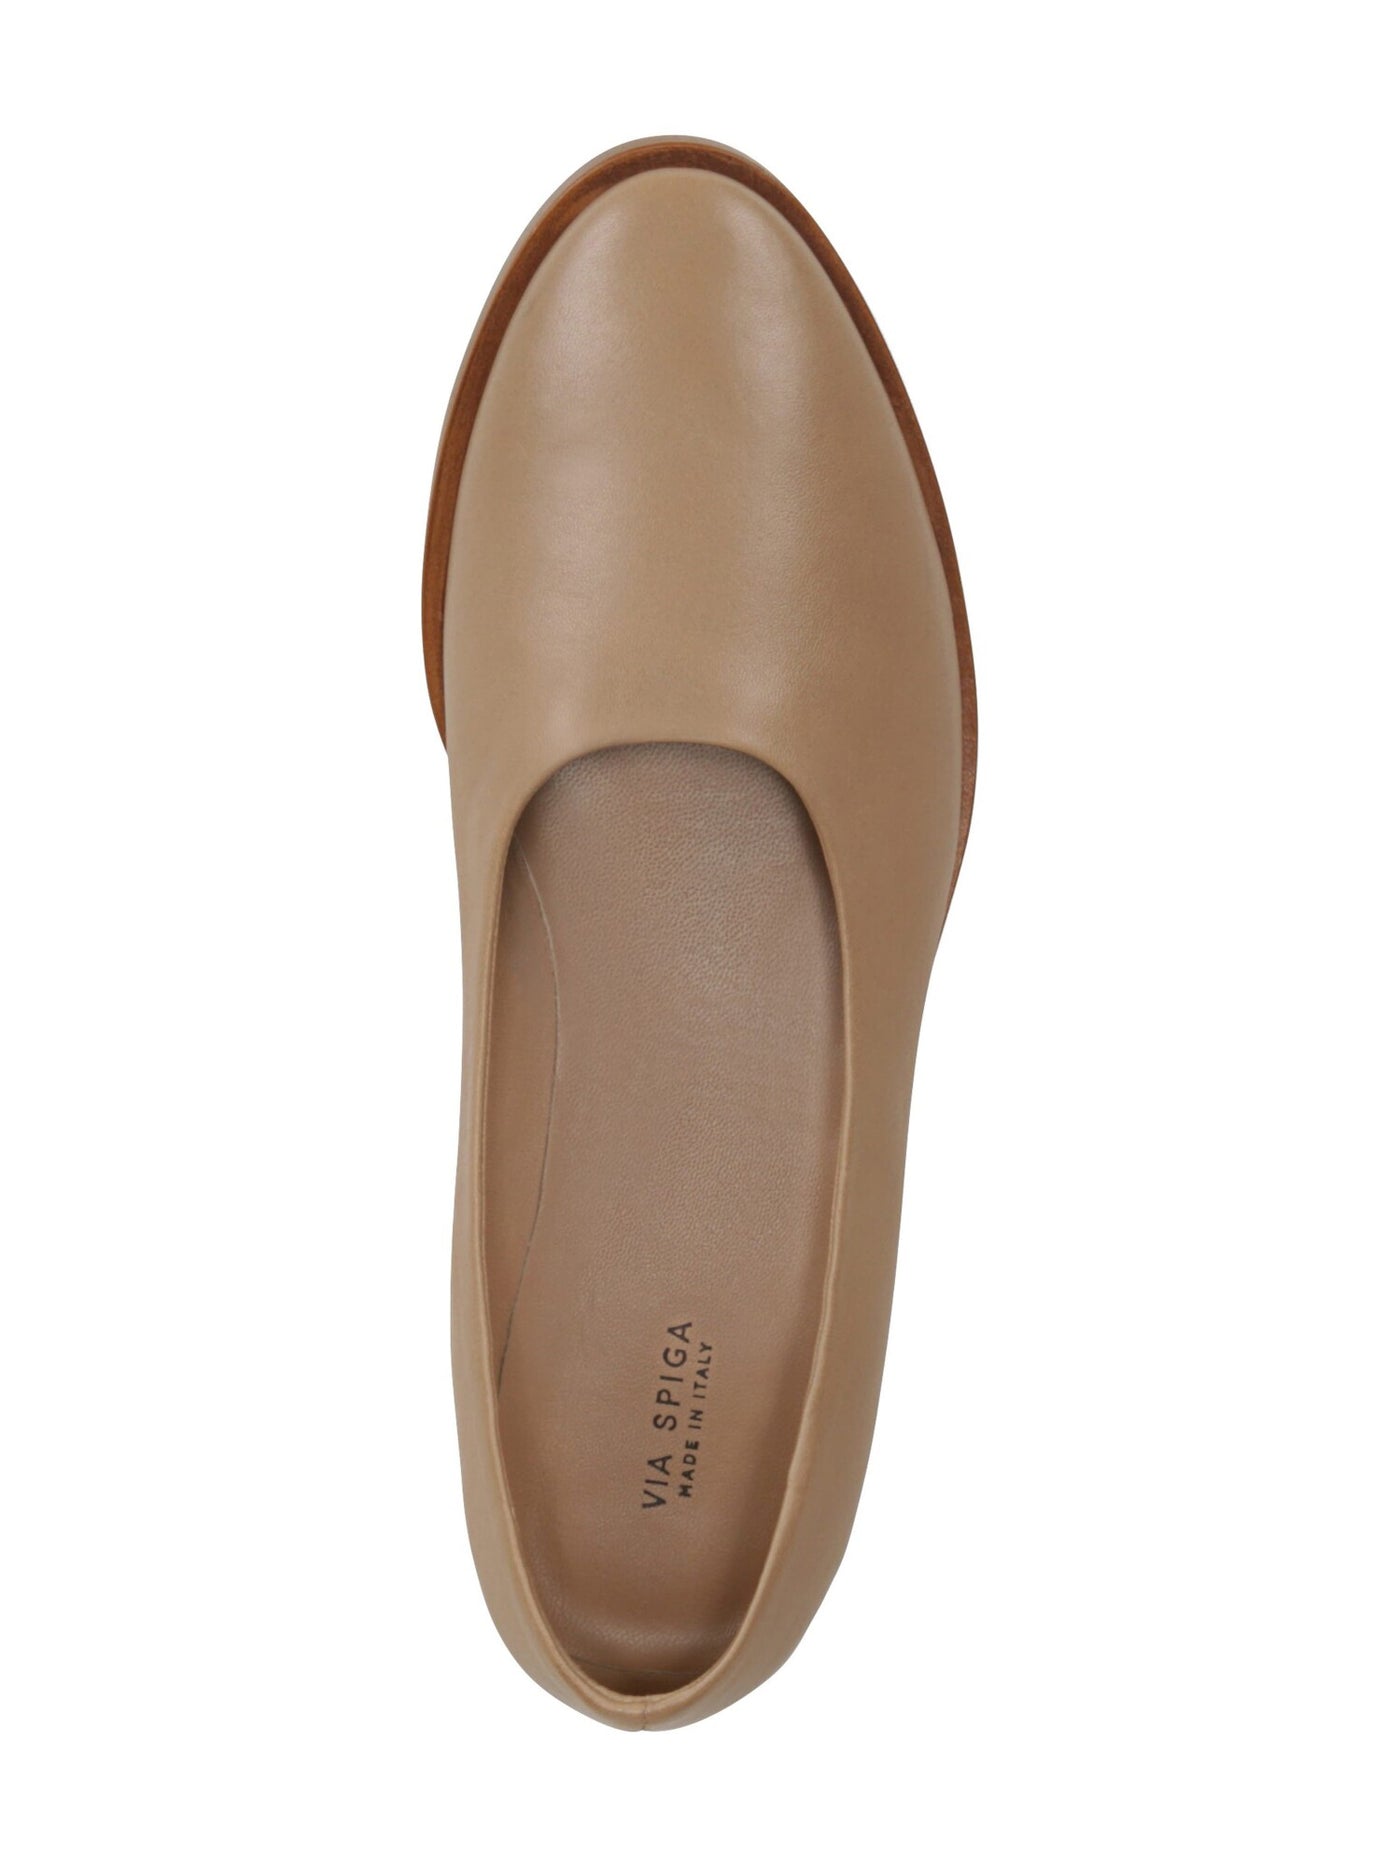 VIA SPIGA Womens Beige Padded Paloma Round Toe Block Heel Slip On Leather Flats Shoes 9.5 M